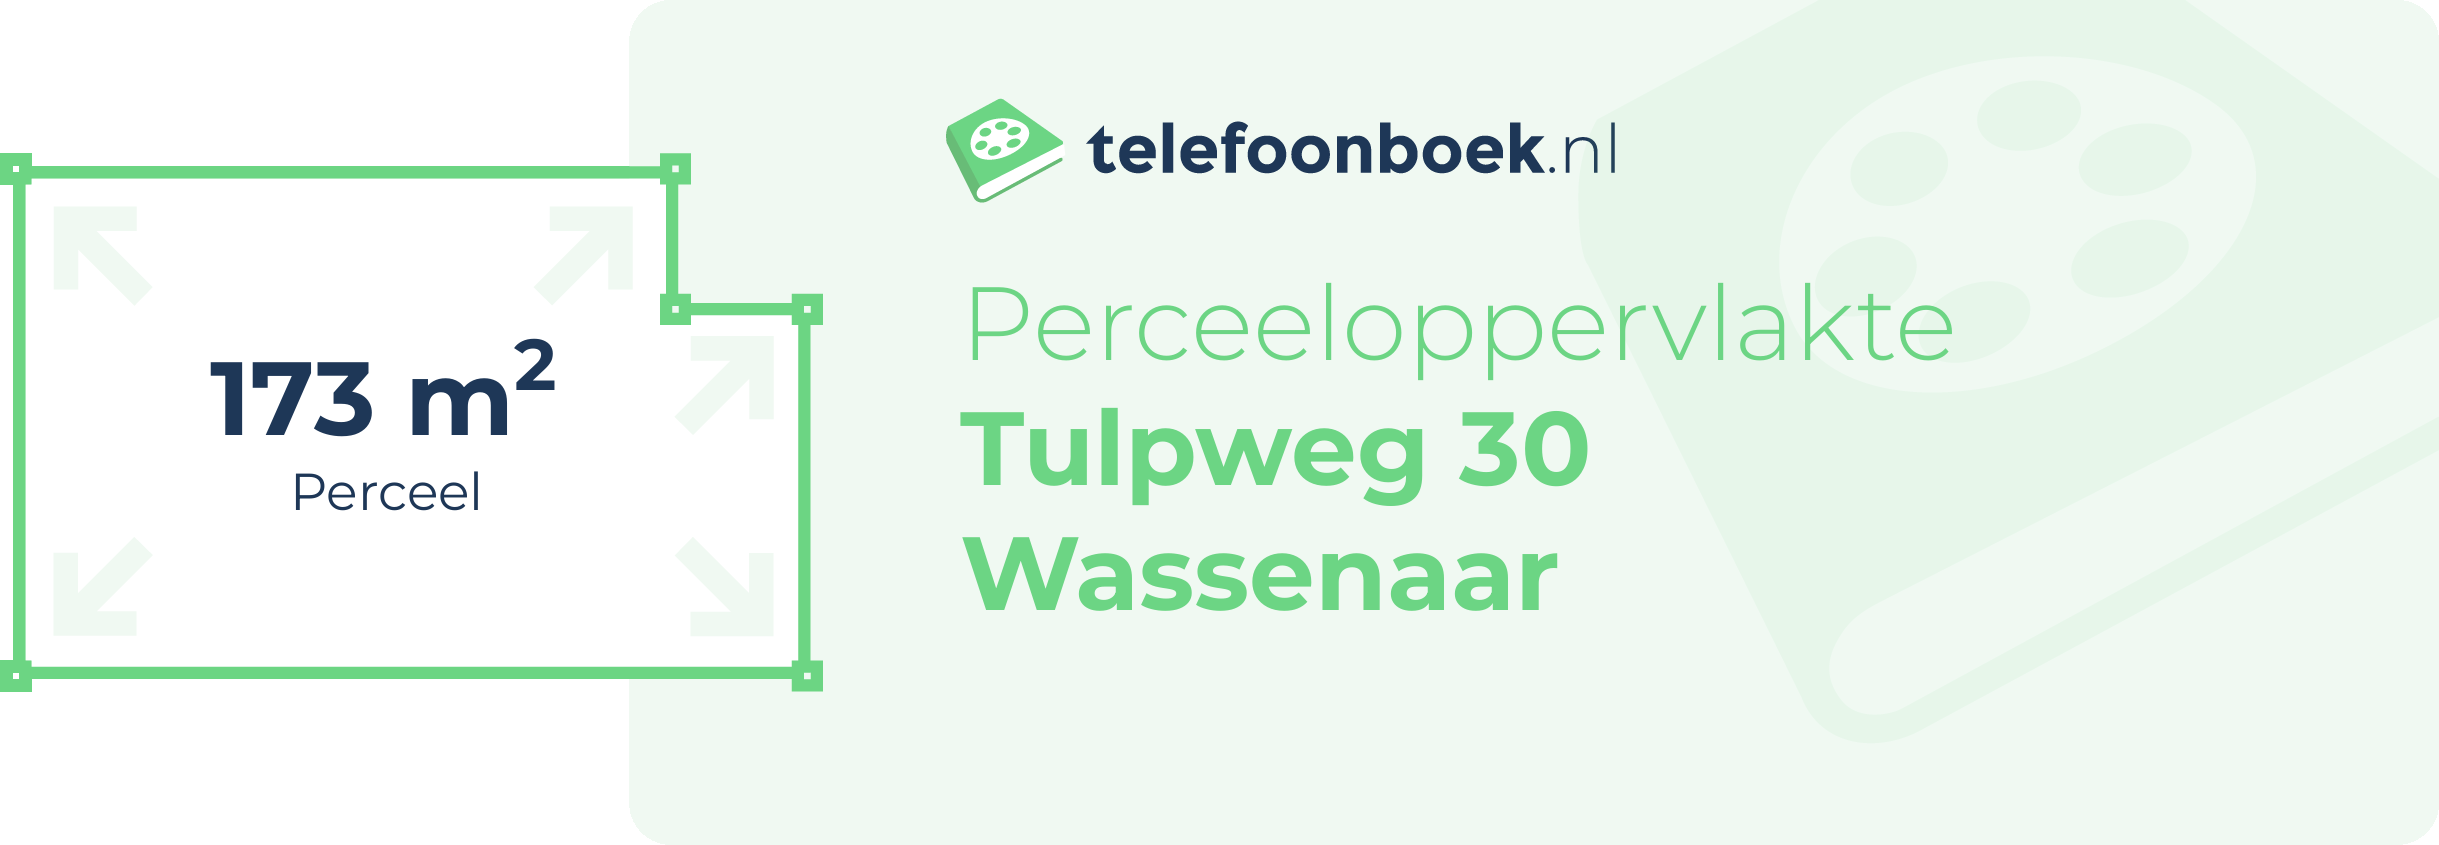 Perceeloppervlakte Tulpweg 30 Wassenaar